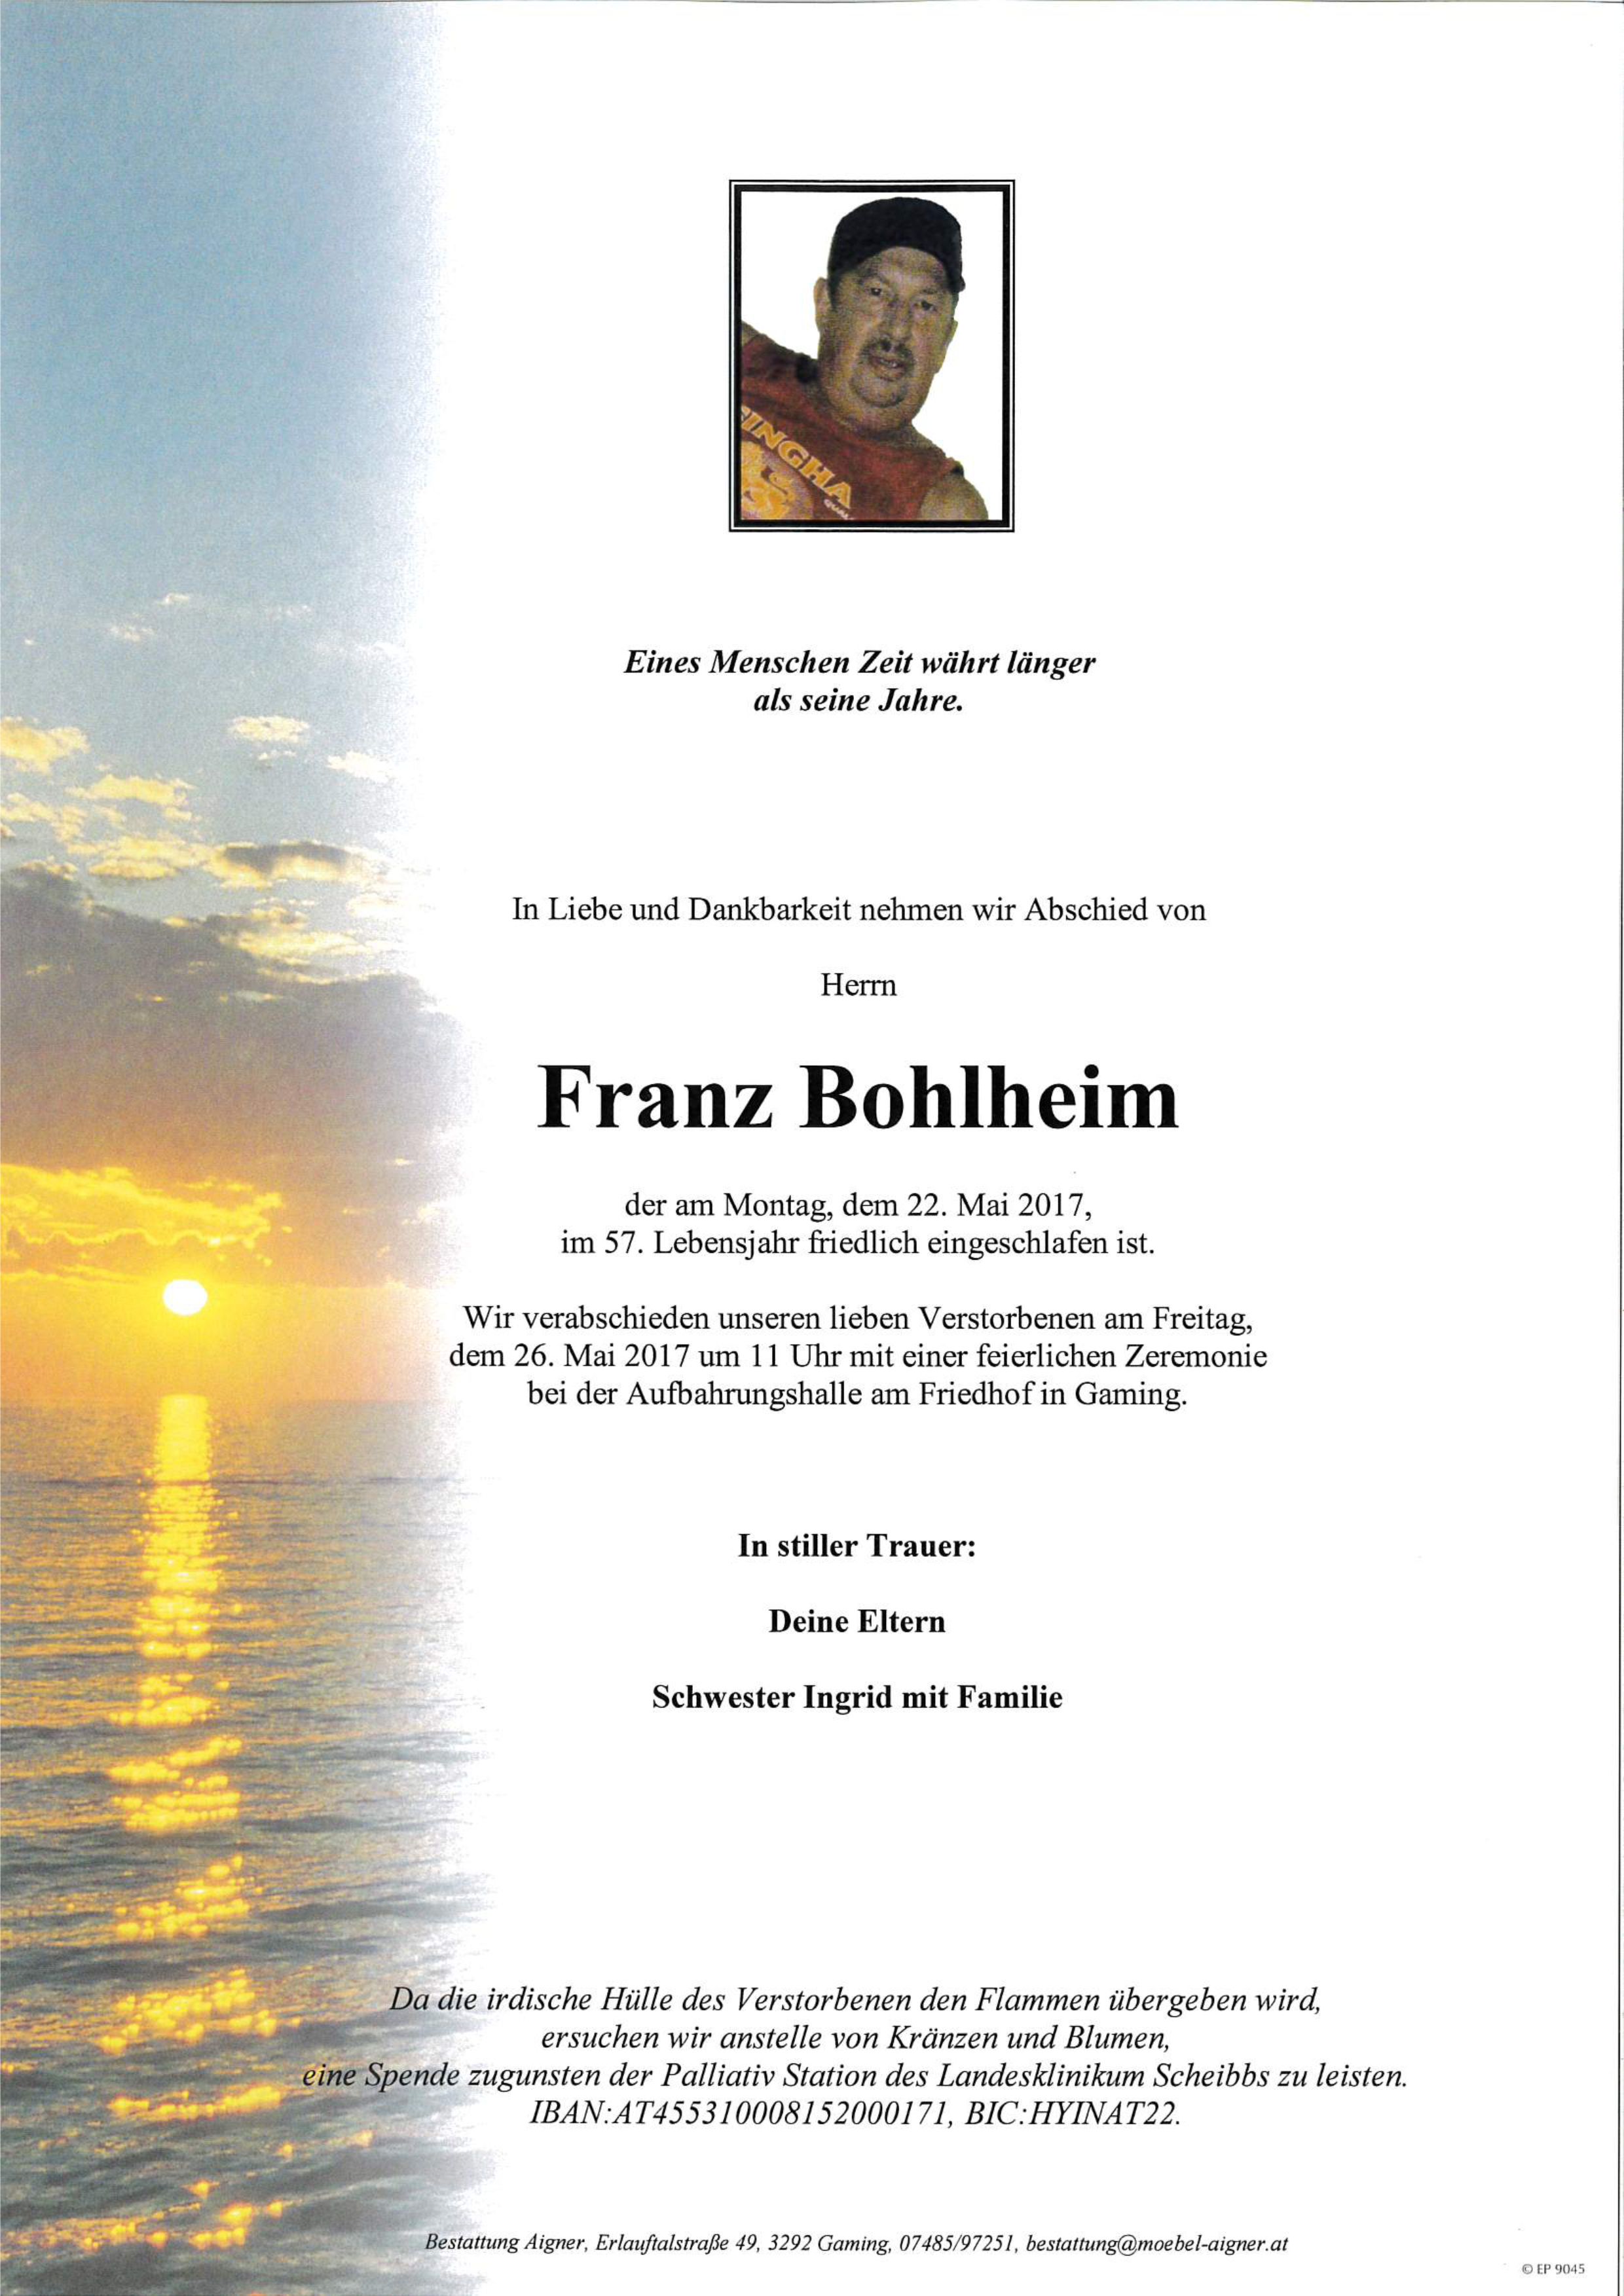 Franz Bohlheim